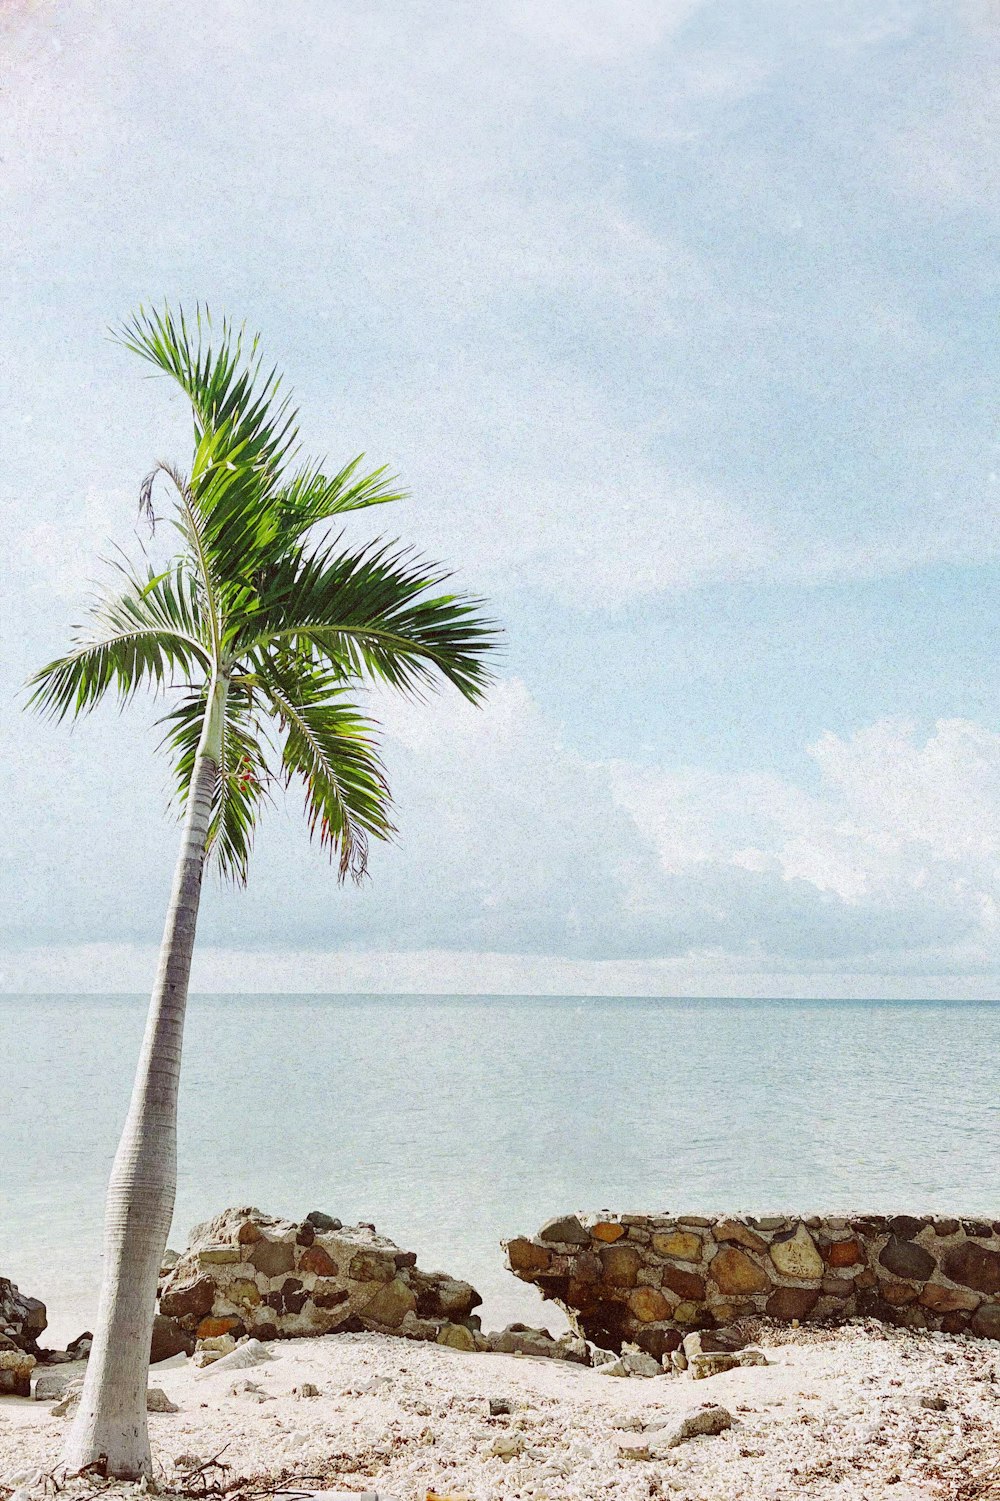 a lone palm tree on a sandy beach